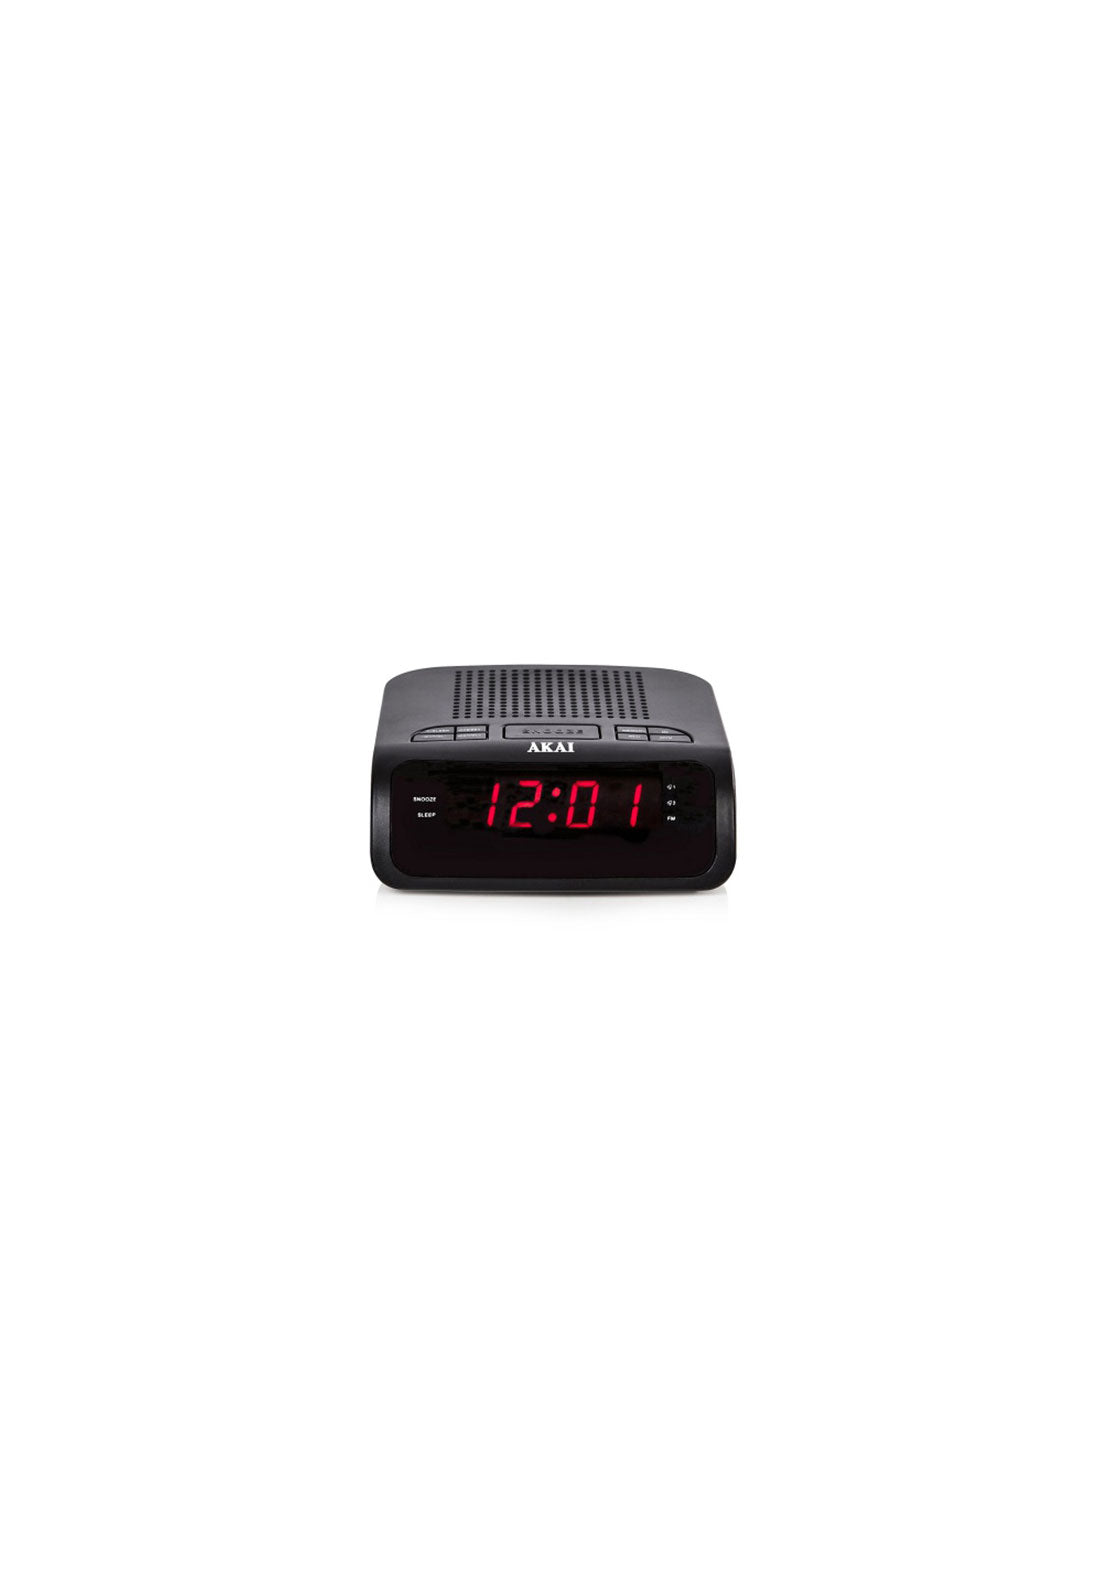 Akai Am/Fm Alarm Clock Radio With Led Display | A61020 - Black 1 Shaws Department Stores